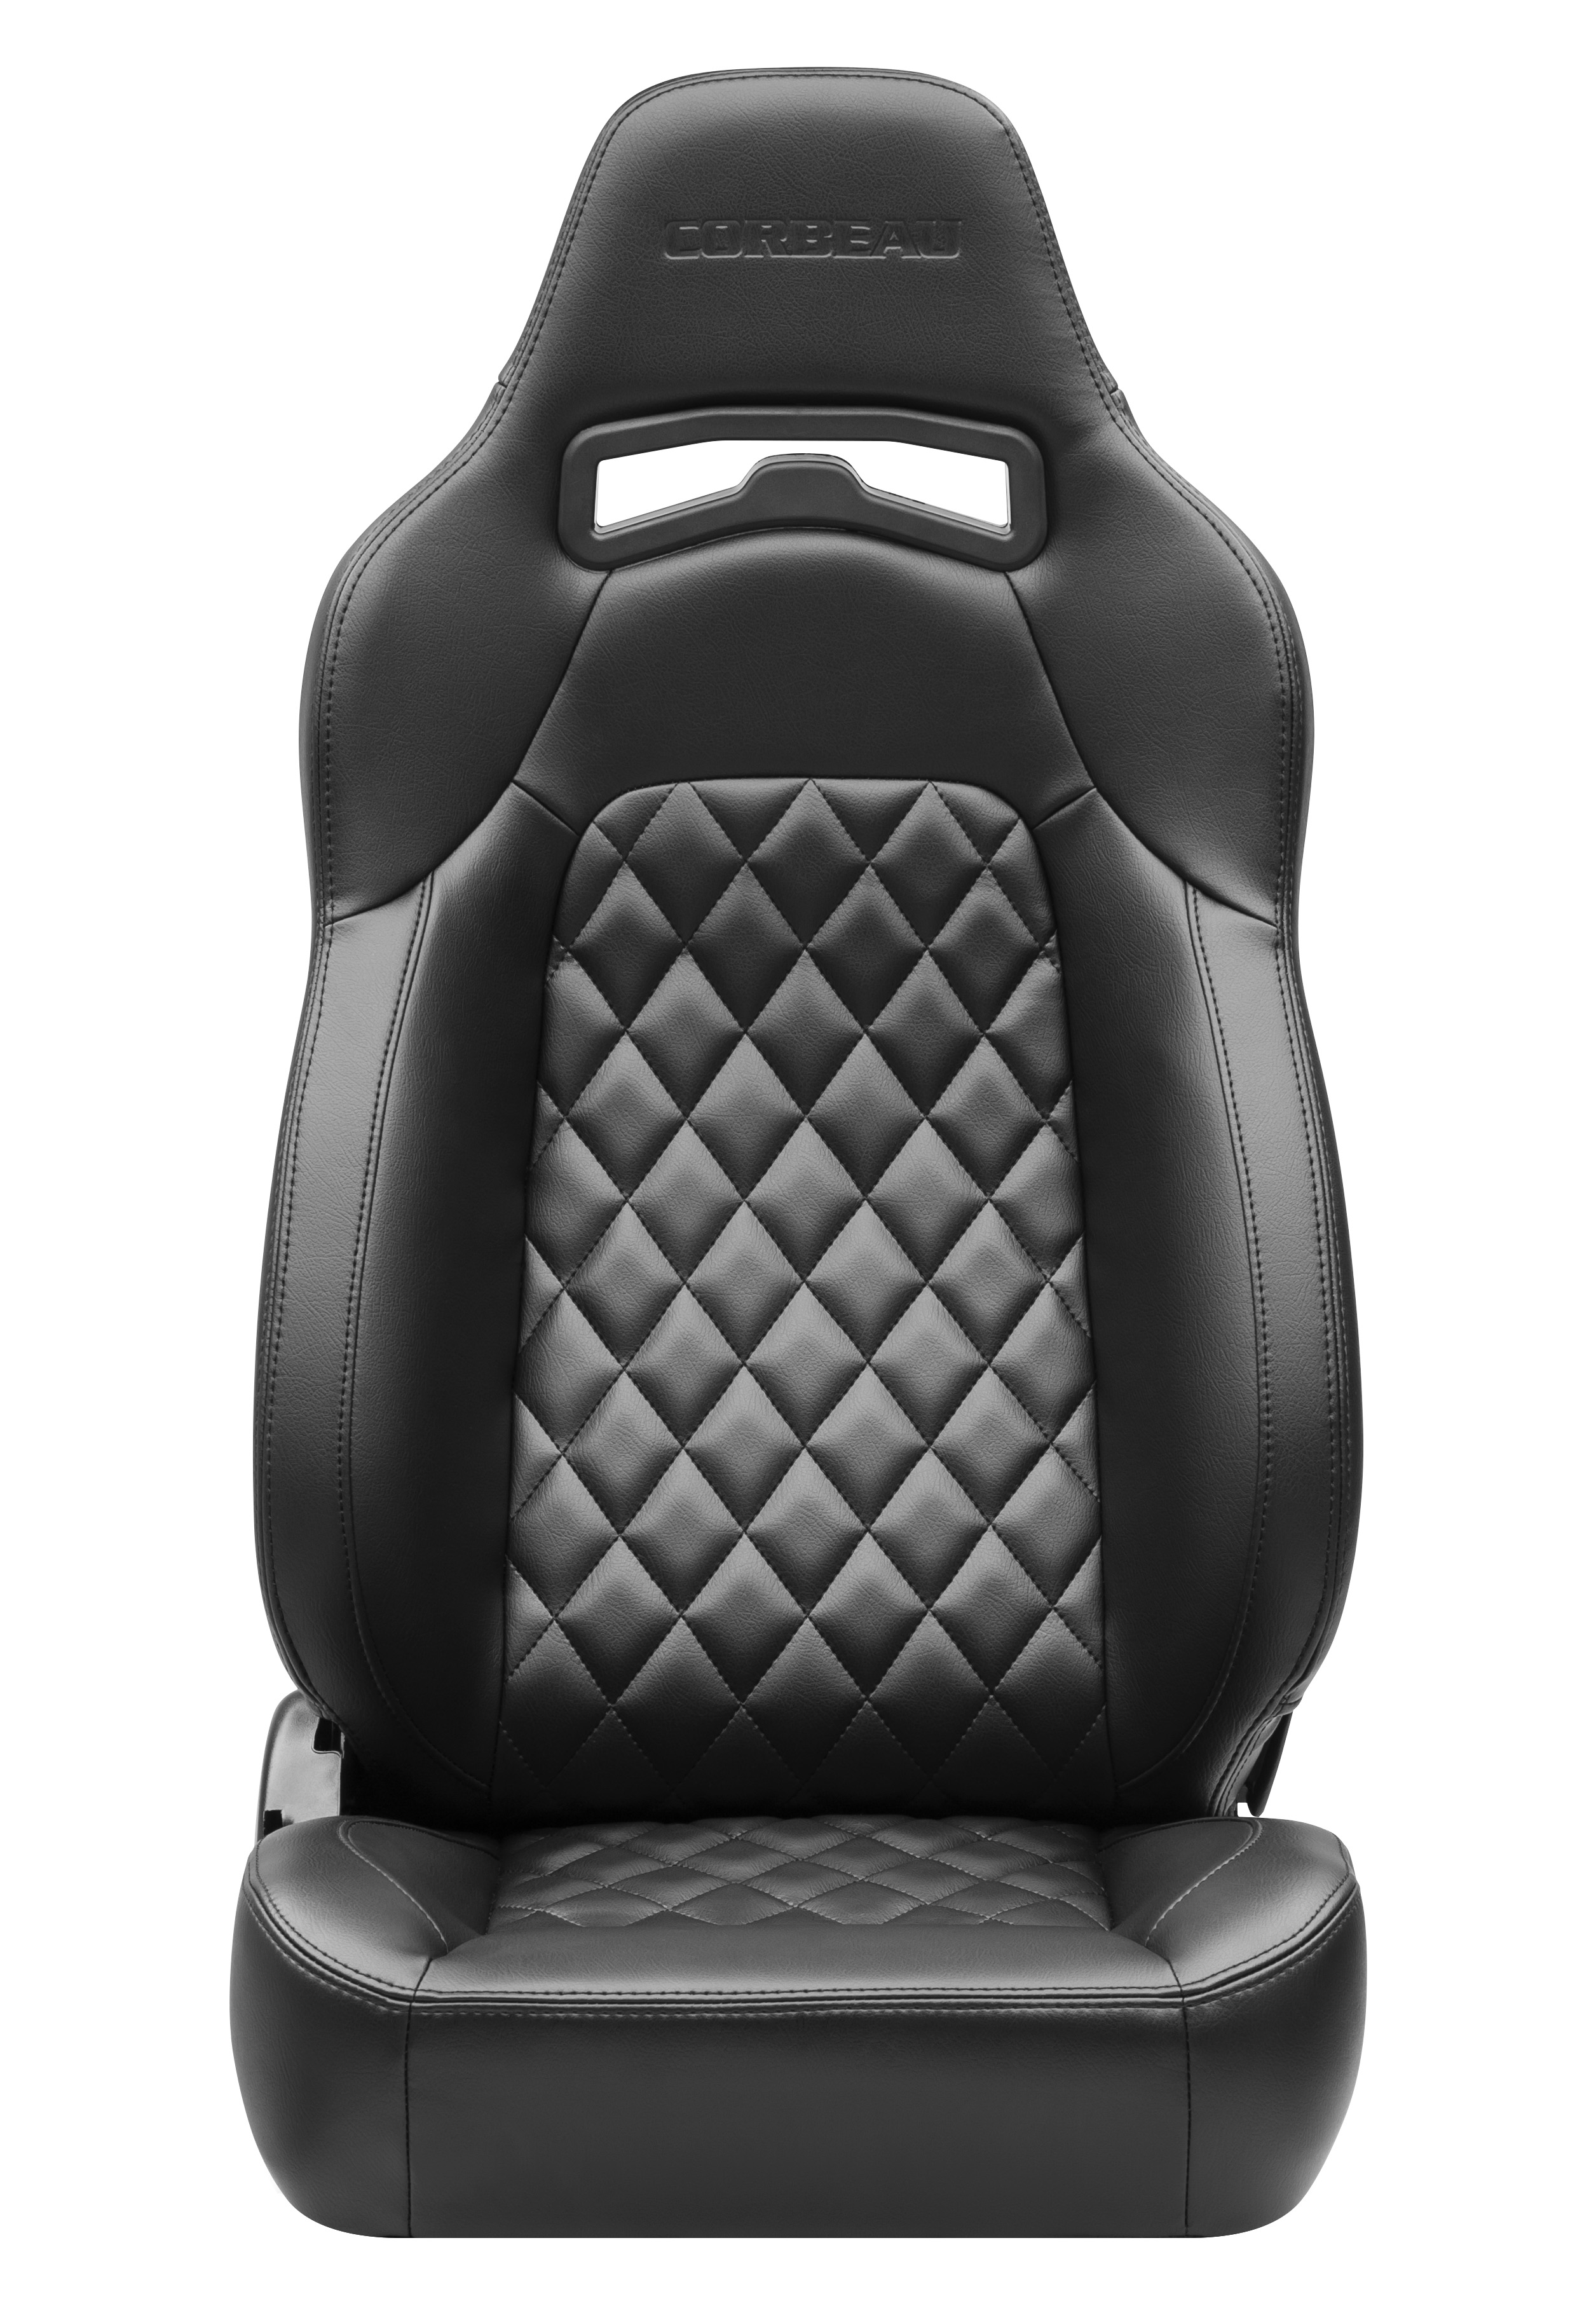 Corbeau Trailcat Racing Seat, Black Vinyl Black Diamond Stitch, 44901BPR